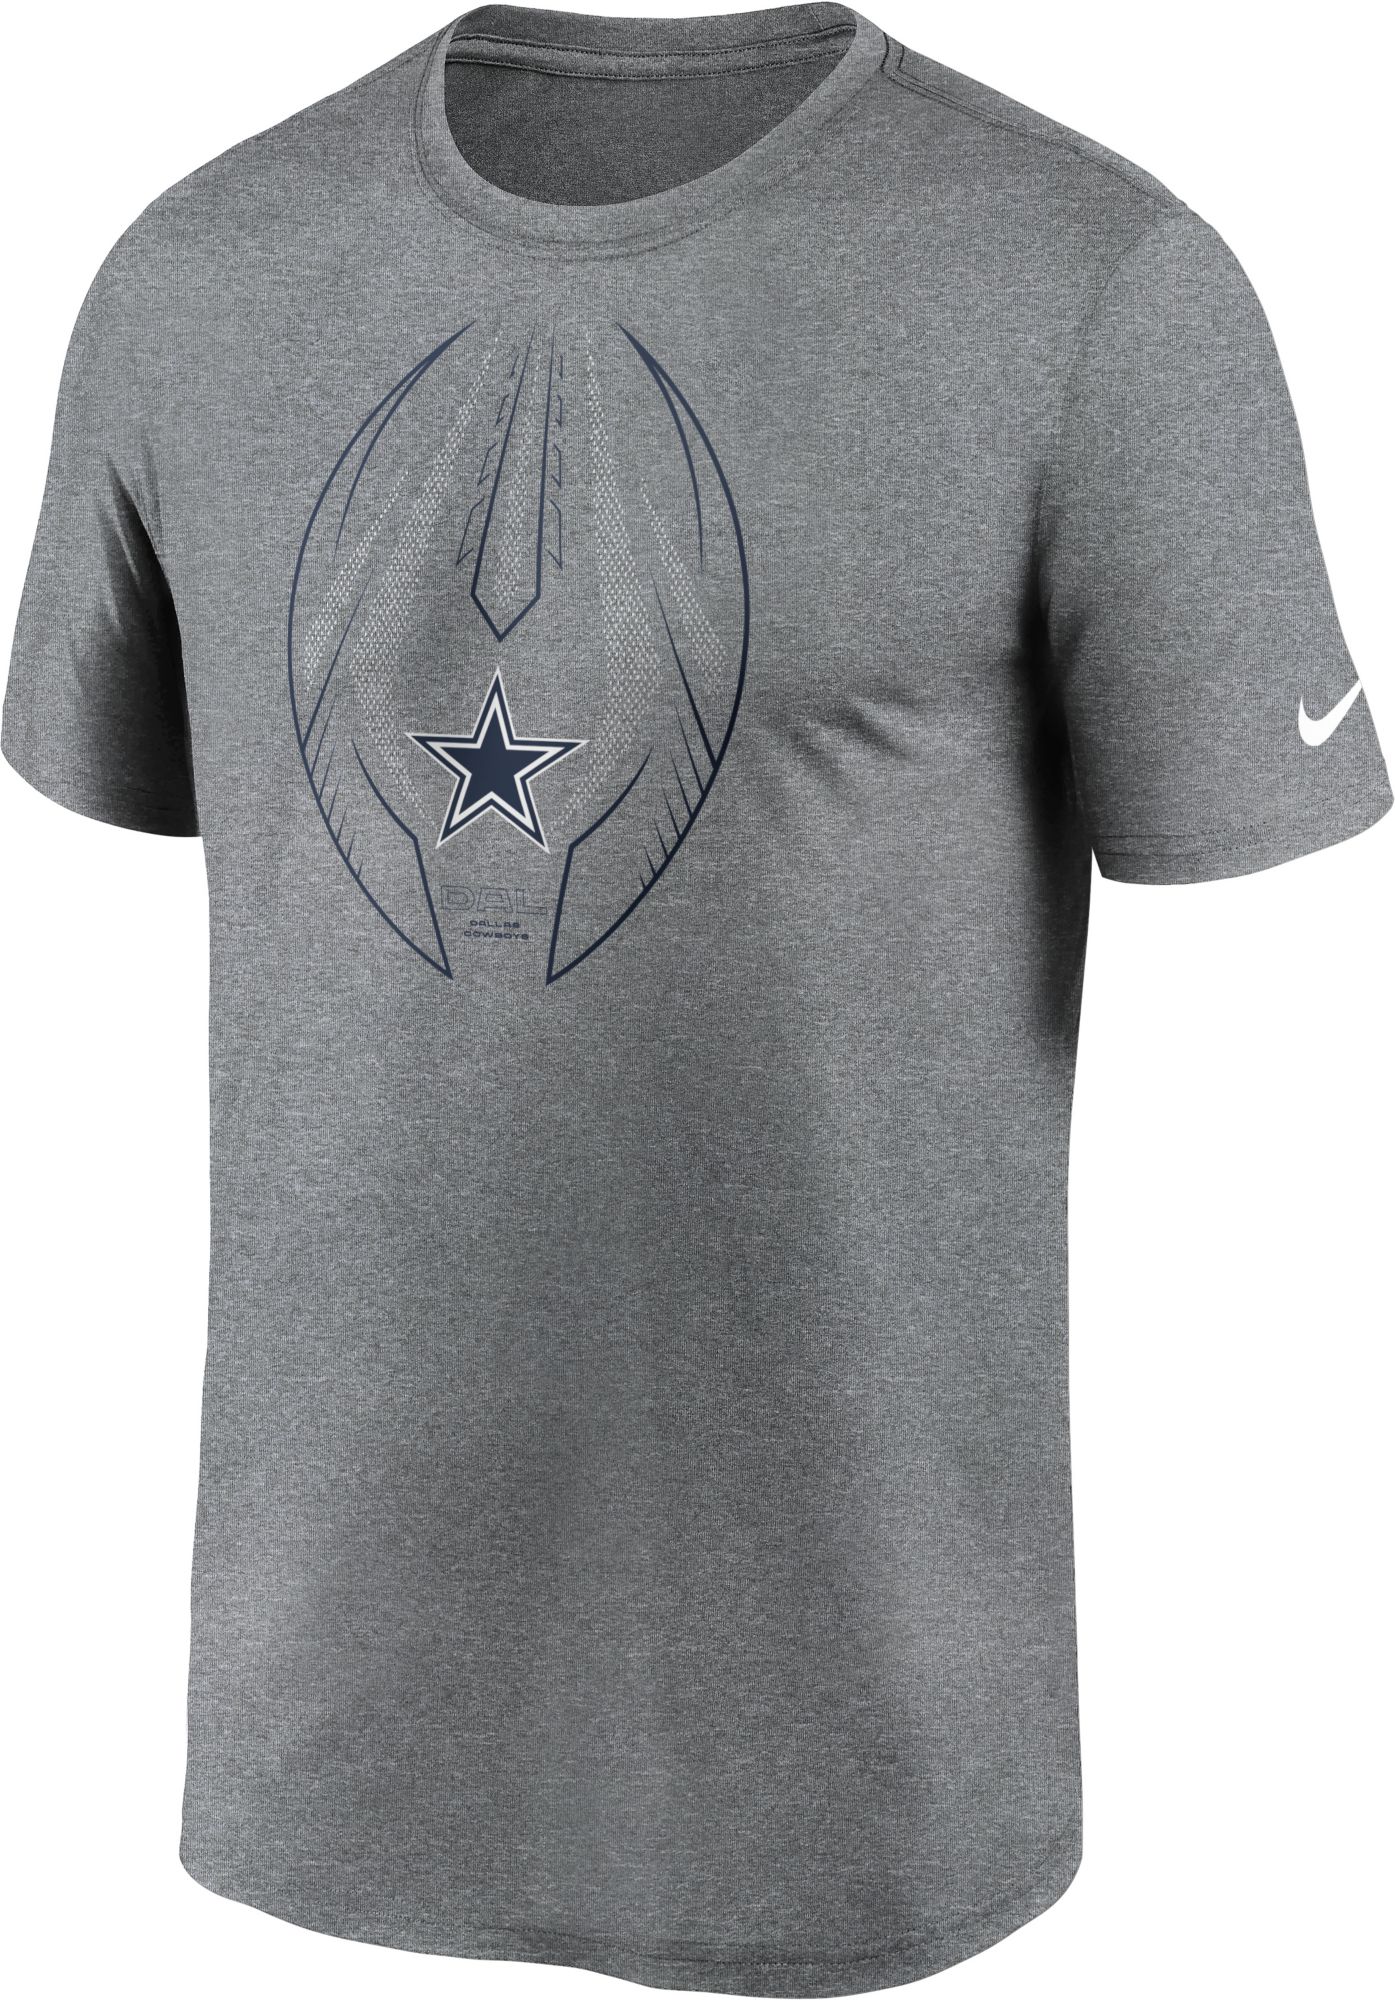 Nike / Men's Dallas Cowboys Legend Icon Grey Performance T-Shirt